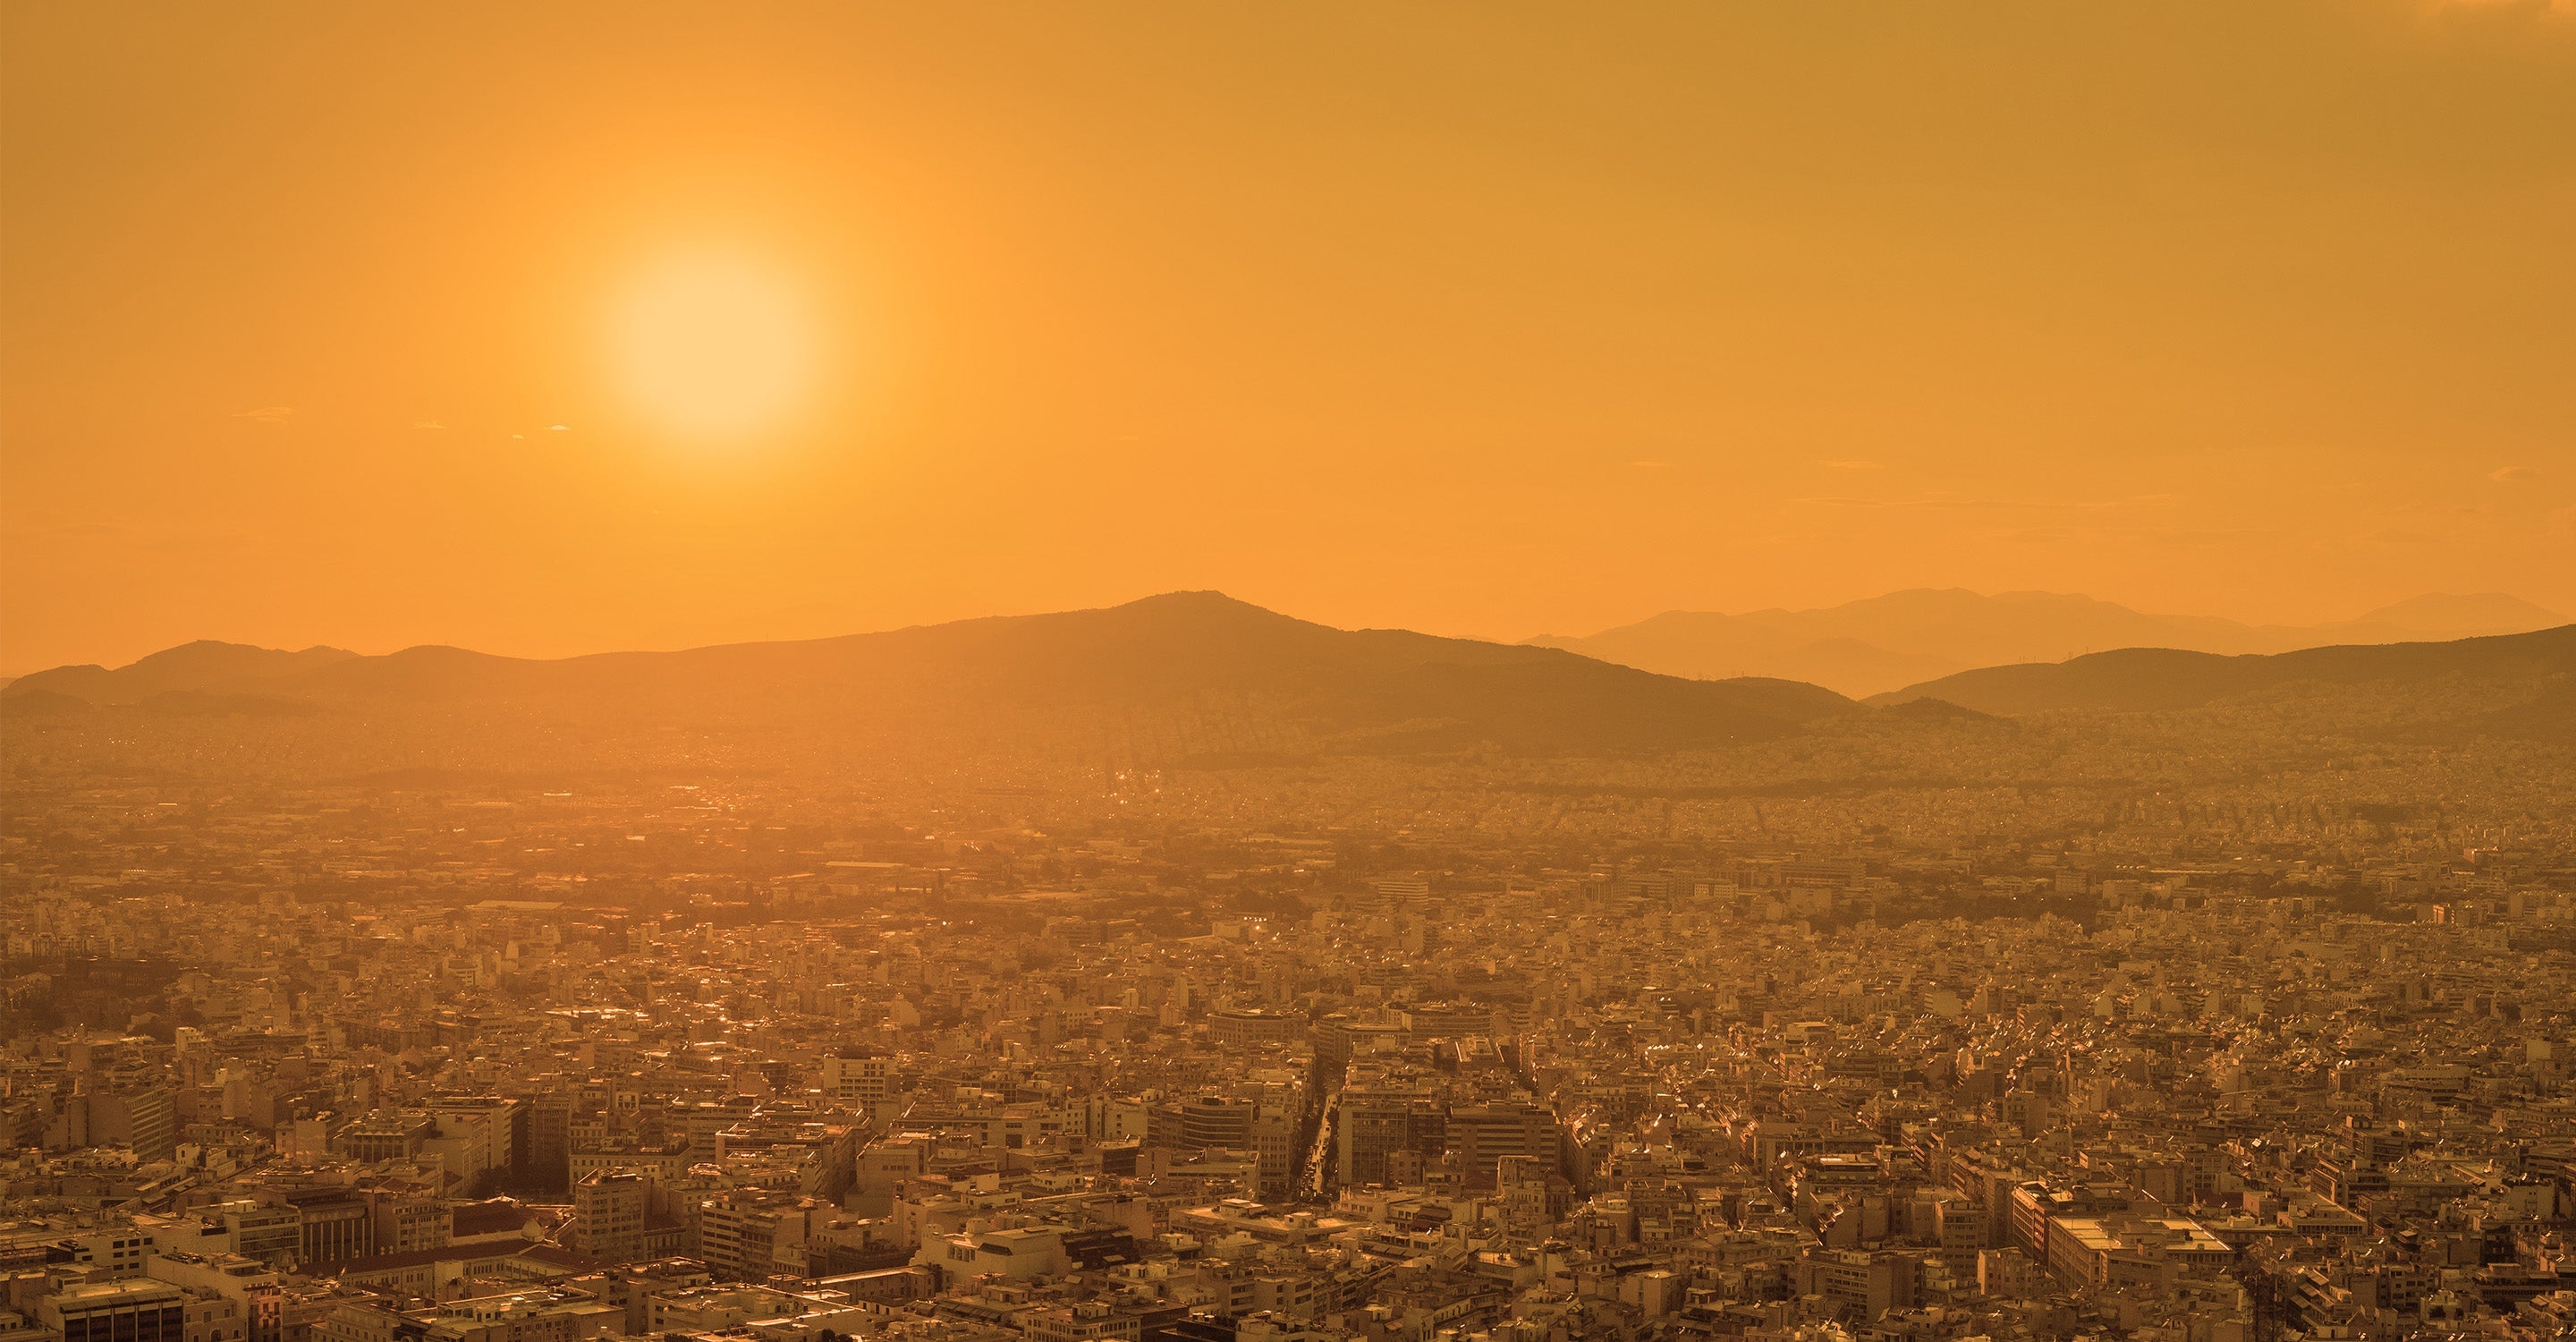 Greece Air Quality Alert: Orange skies over Athensというタイトルのニュース記事のサムネイル